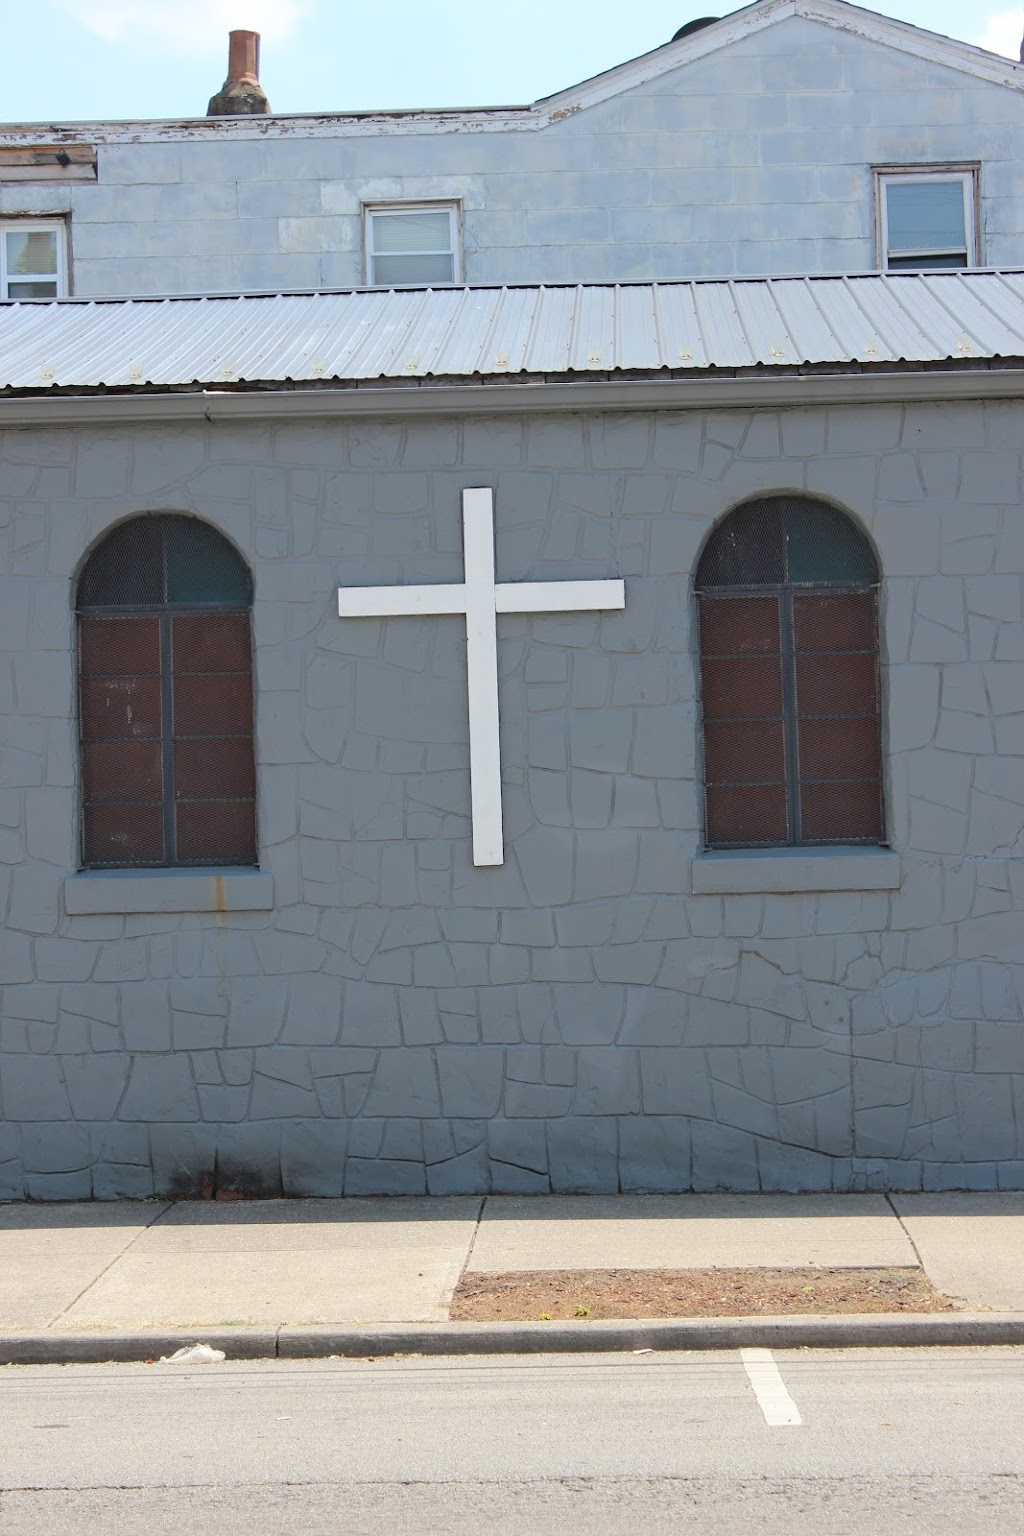 Newport Church of God | 212 W 11th St, Newport, KY 41071, USA | Phone: (859) 240-5990